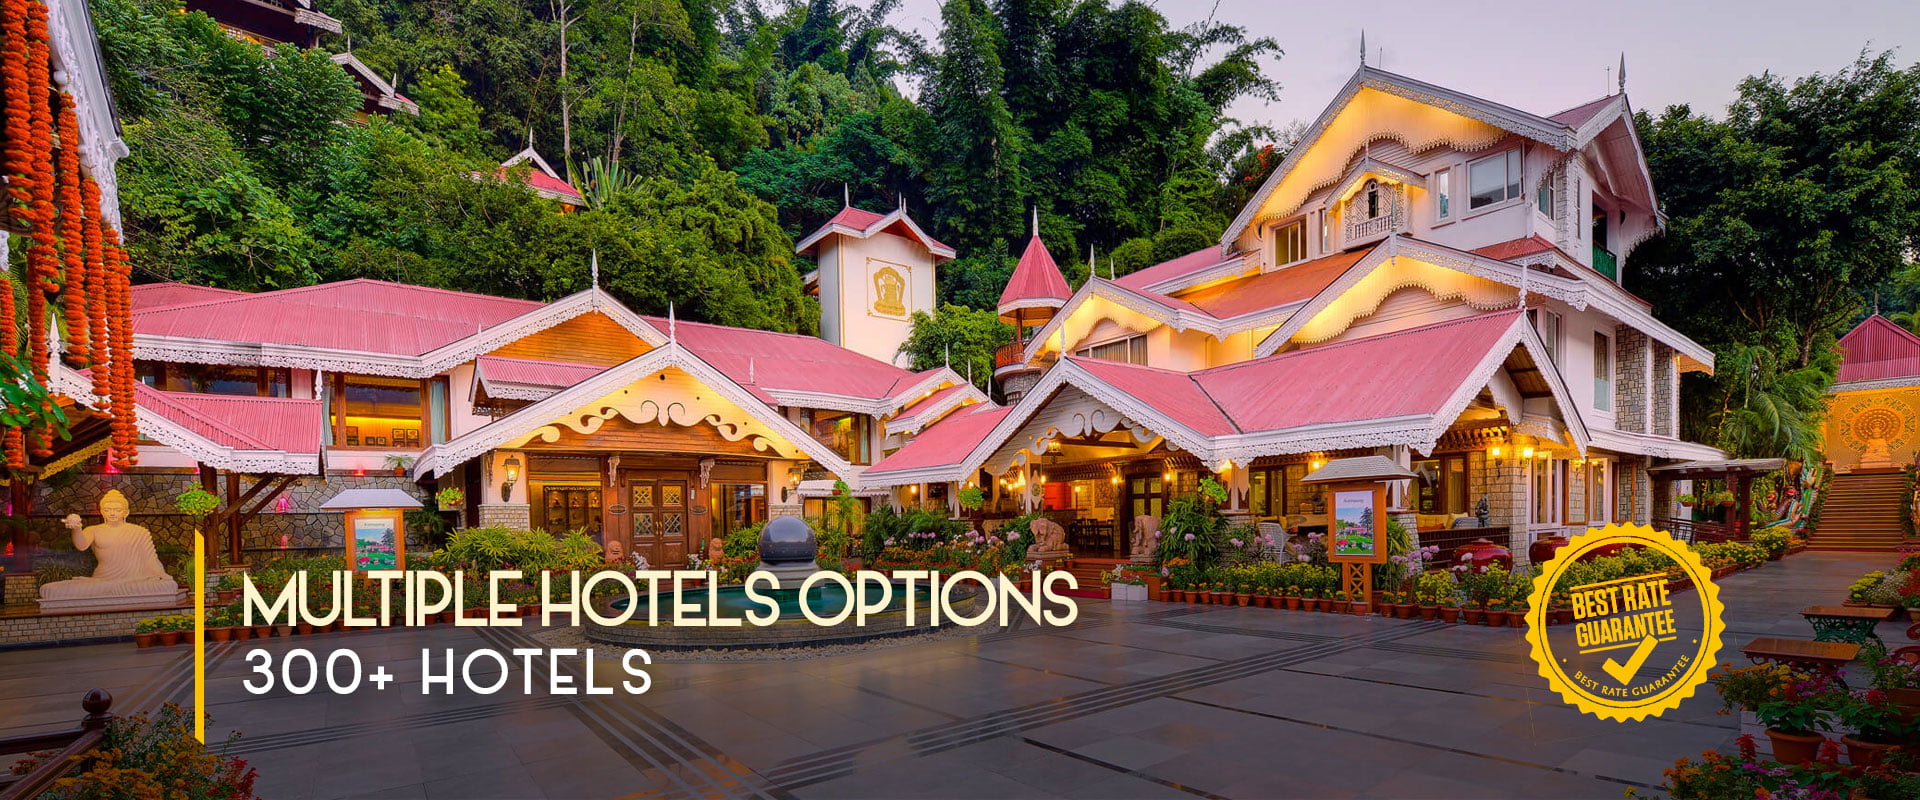 Hotel Choices